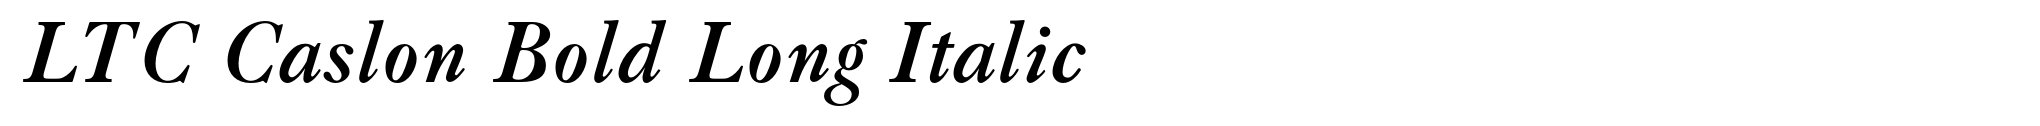 LTC Caslon Bold Long Italic image